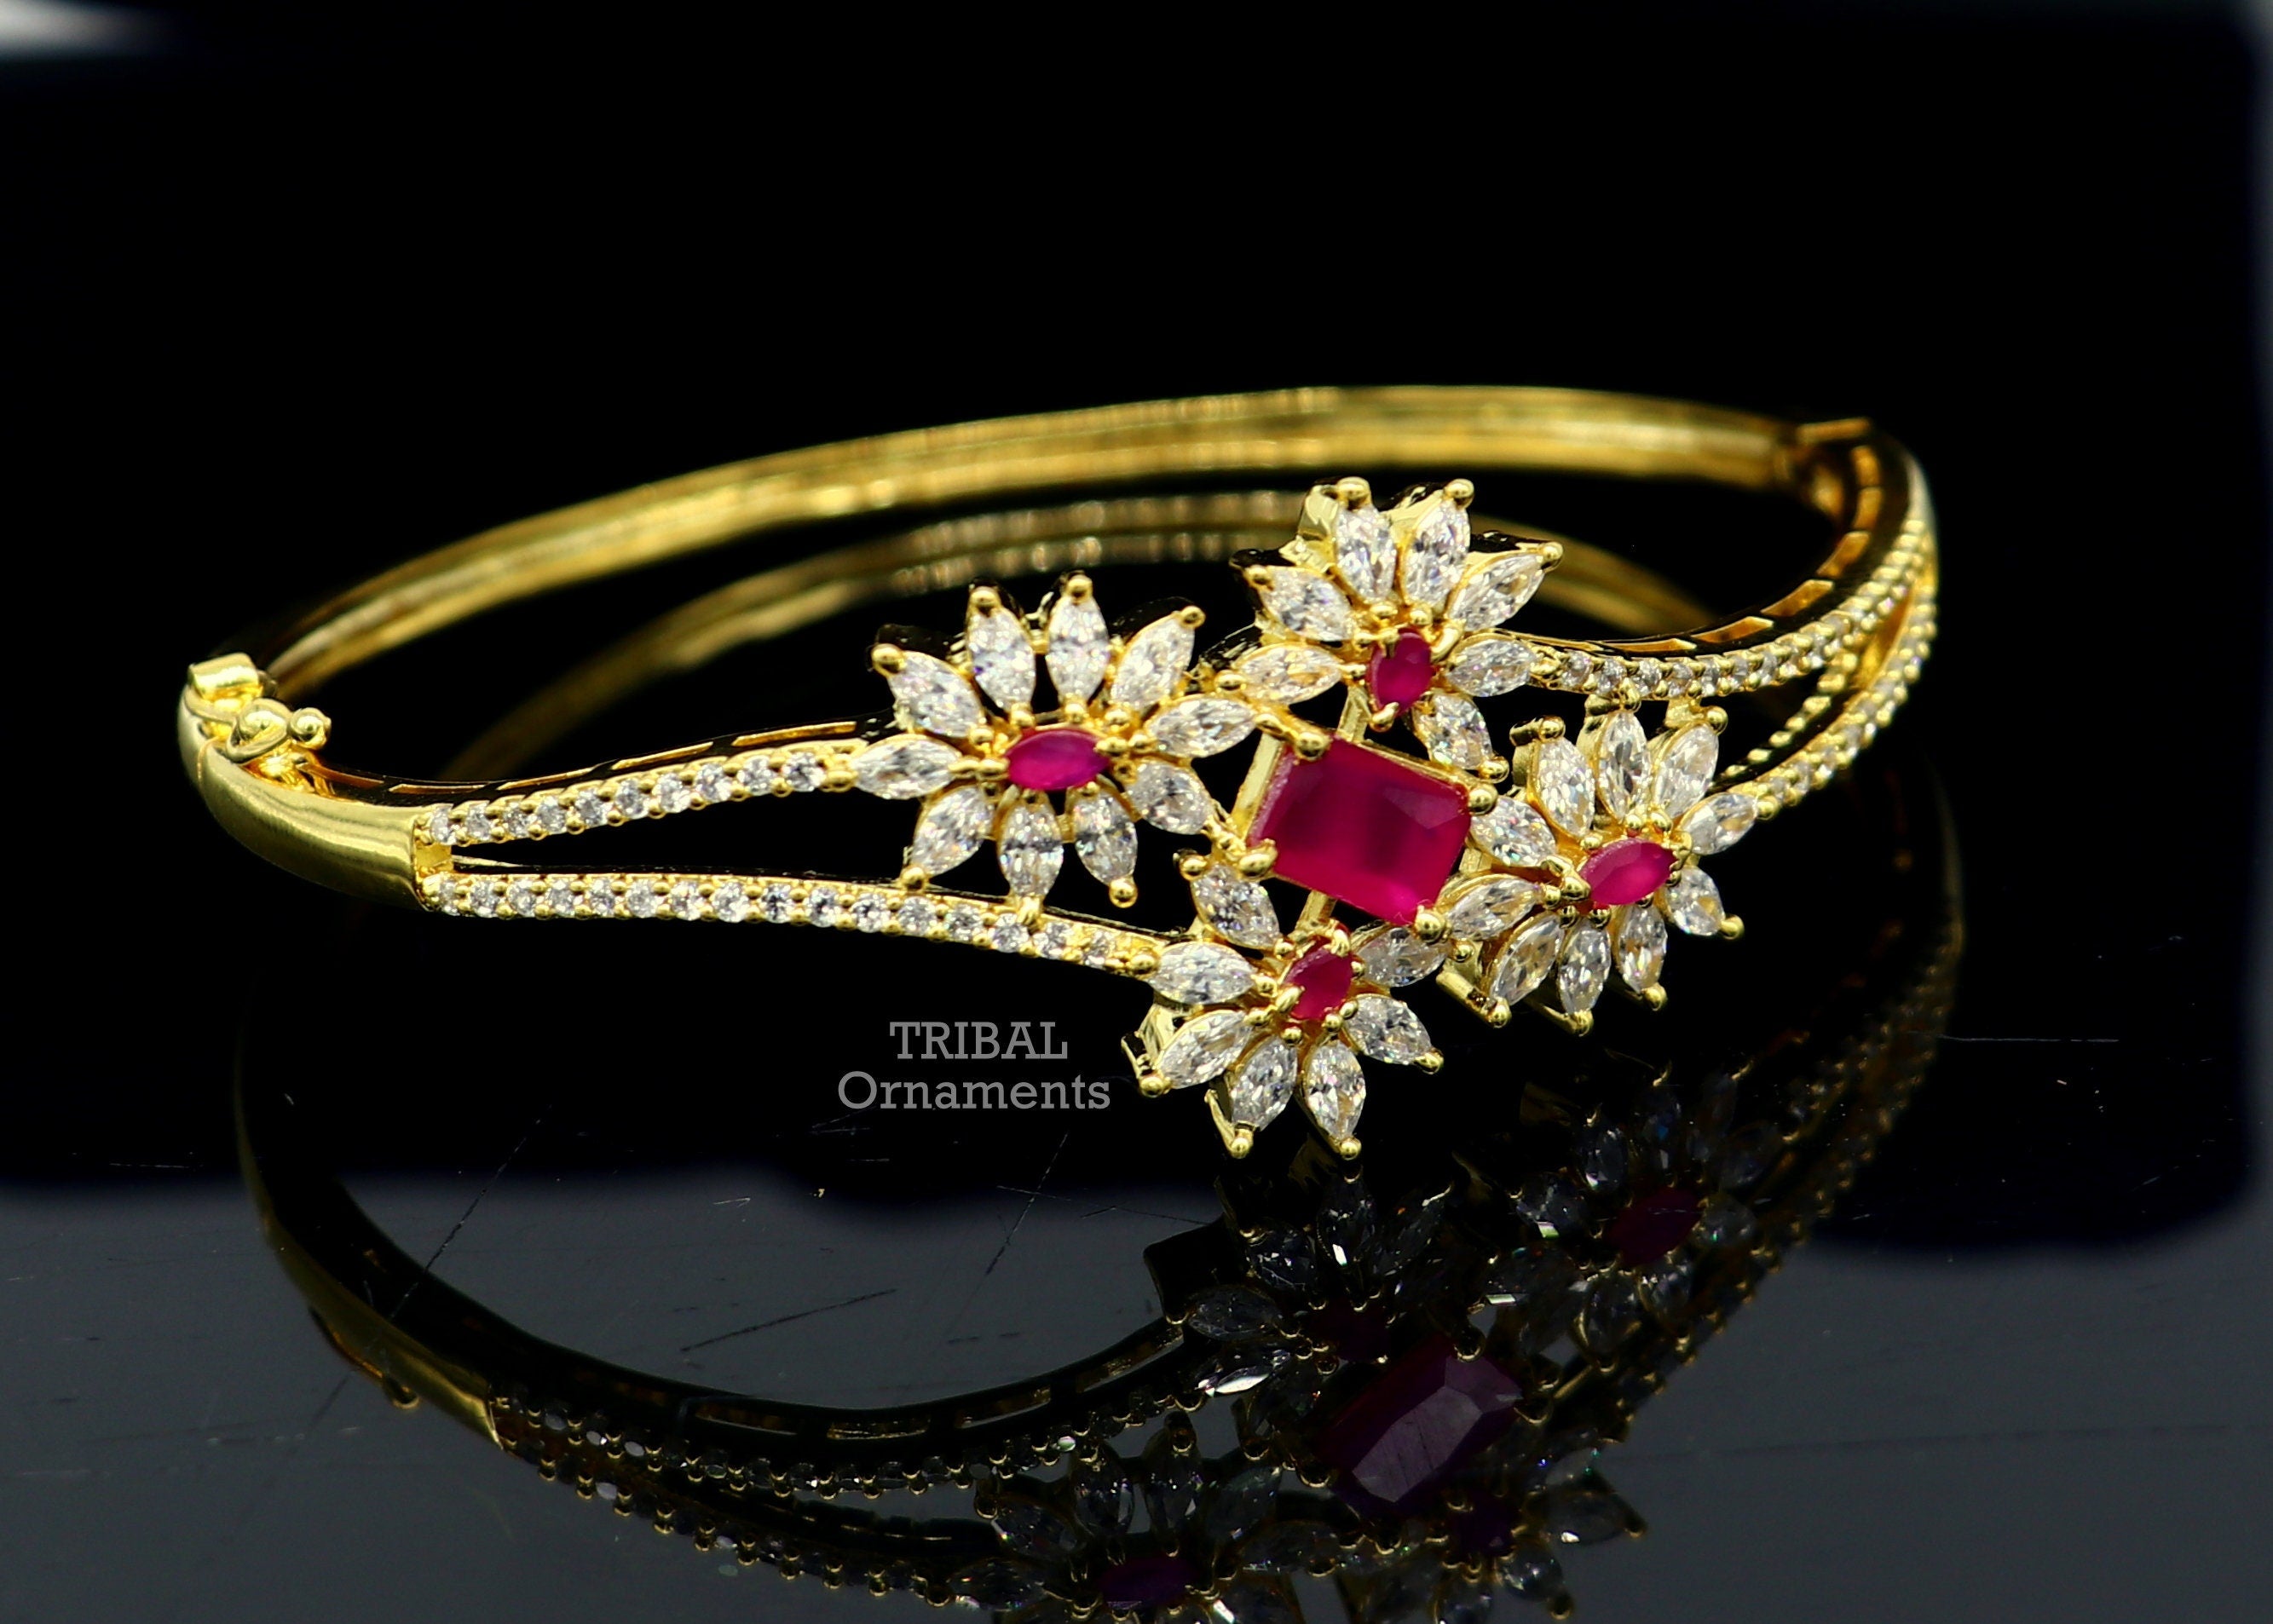 Source new italy design luxury cubic zirconia coloful gemstone women cuff  copper bangle bracelet joias semijoias jewelry on m.